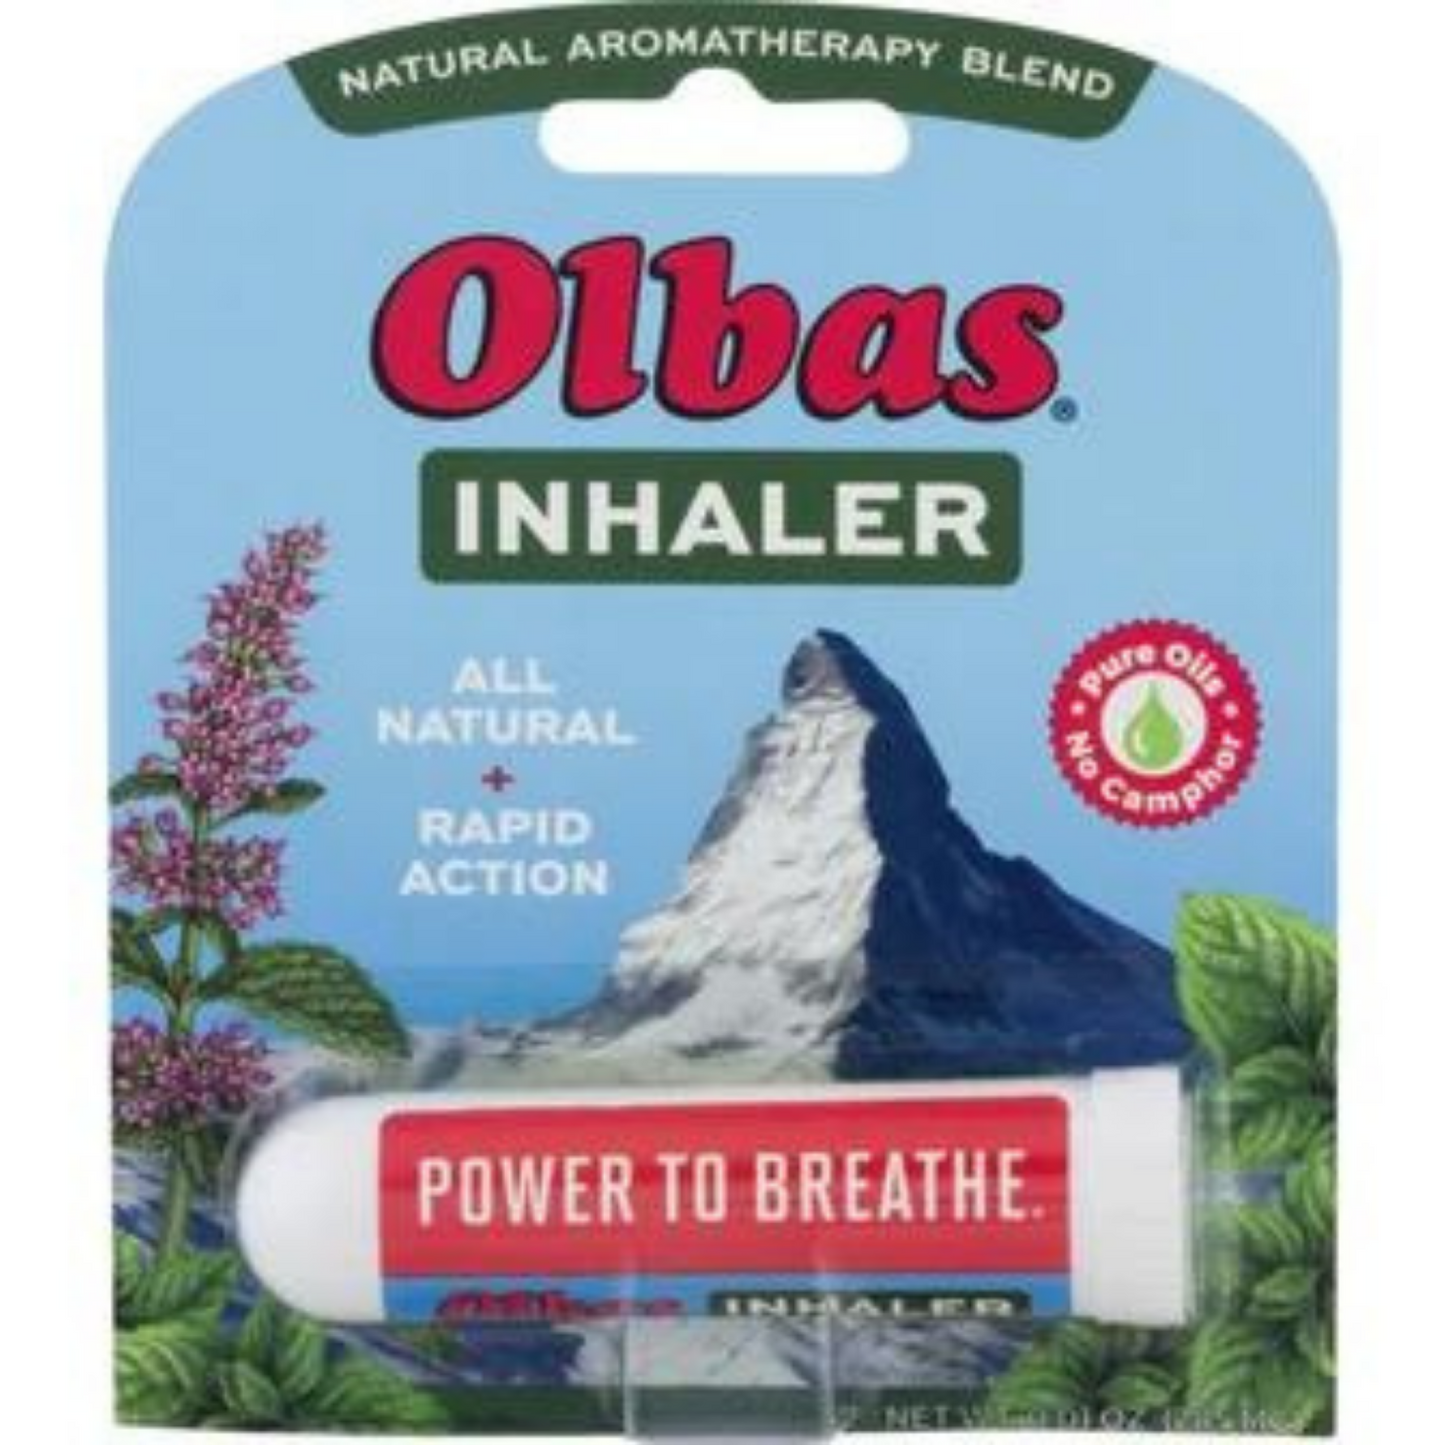 Primary image of Olbas Inhaler